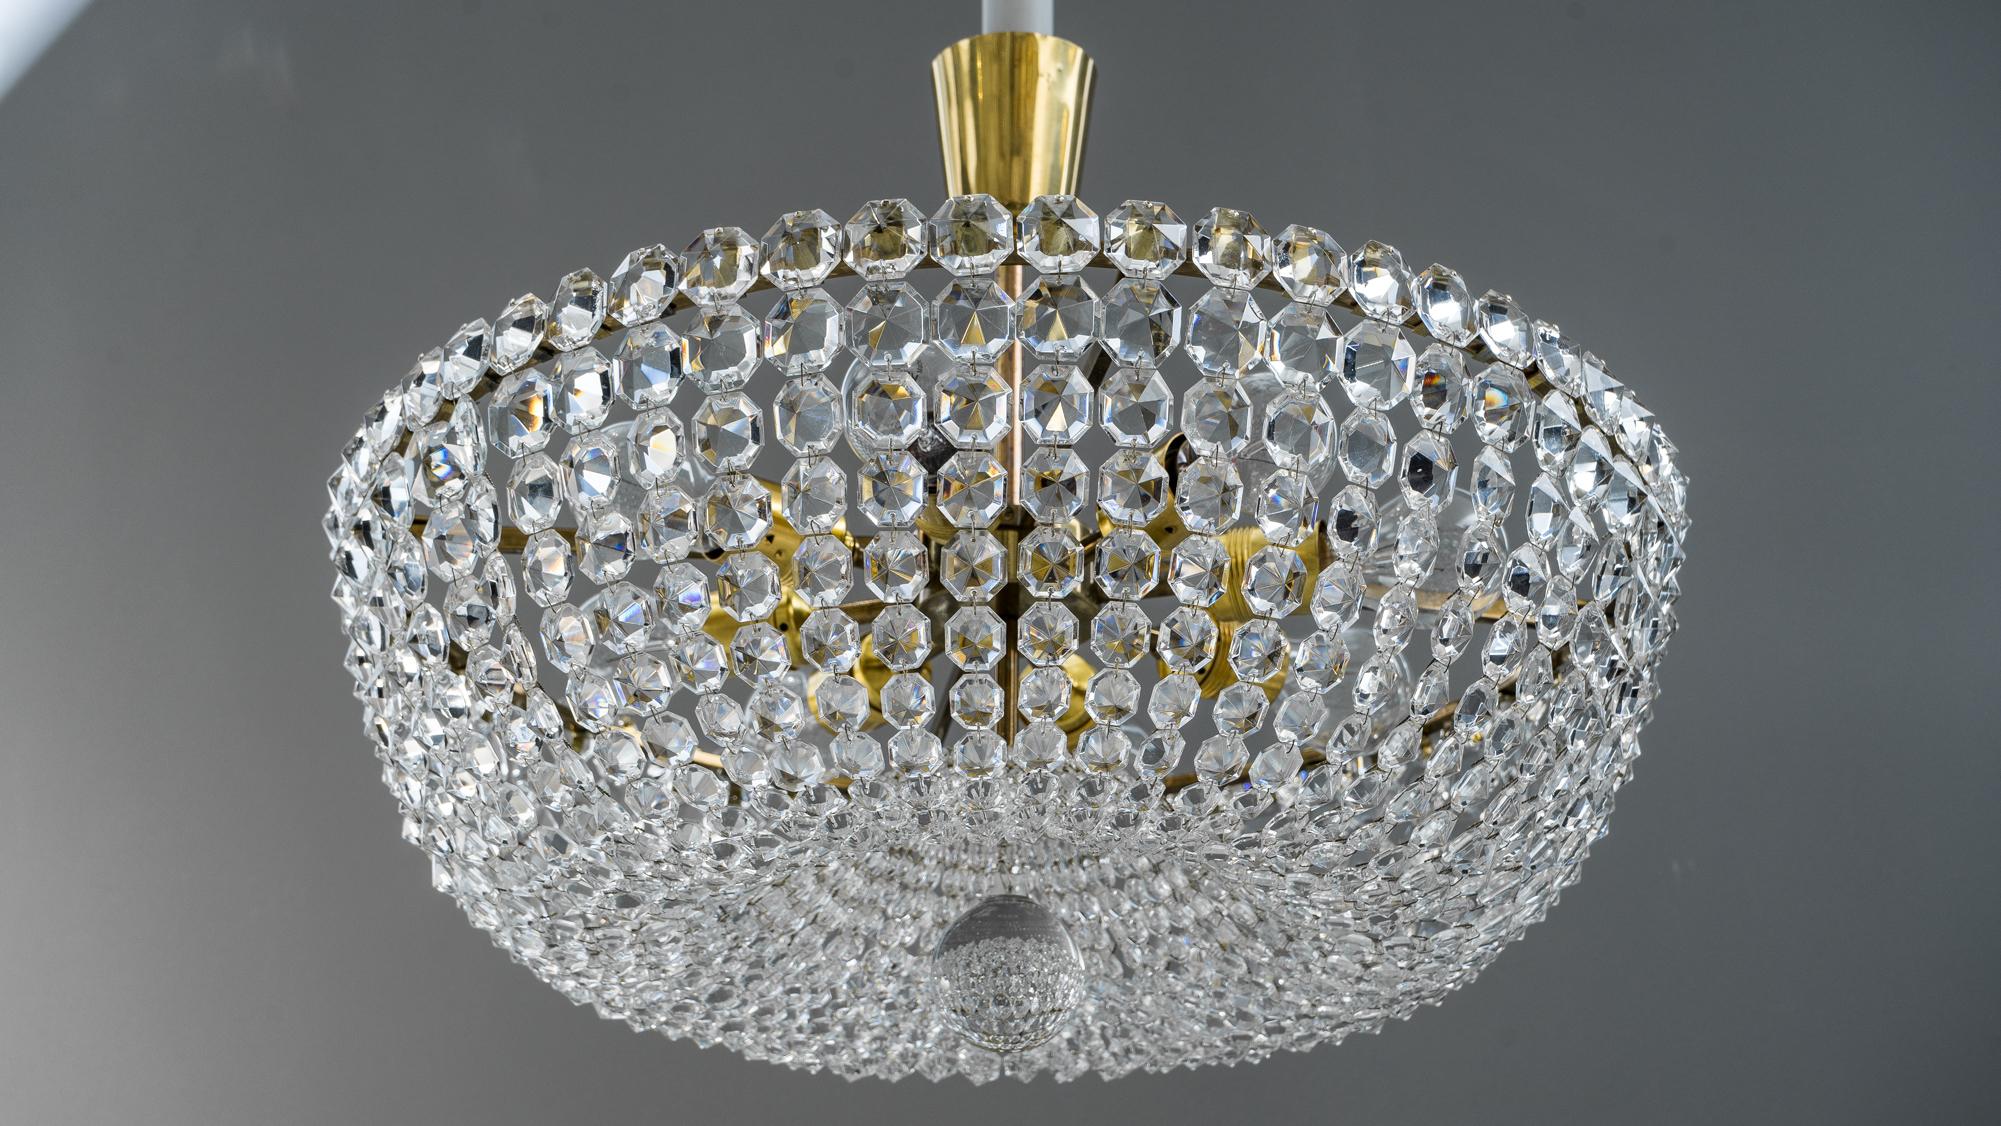 Big Lobmeyr crystal chandelier, 1950s (marked)
Original condition.